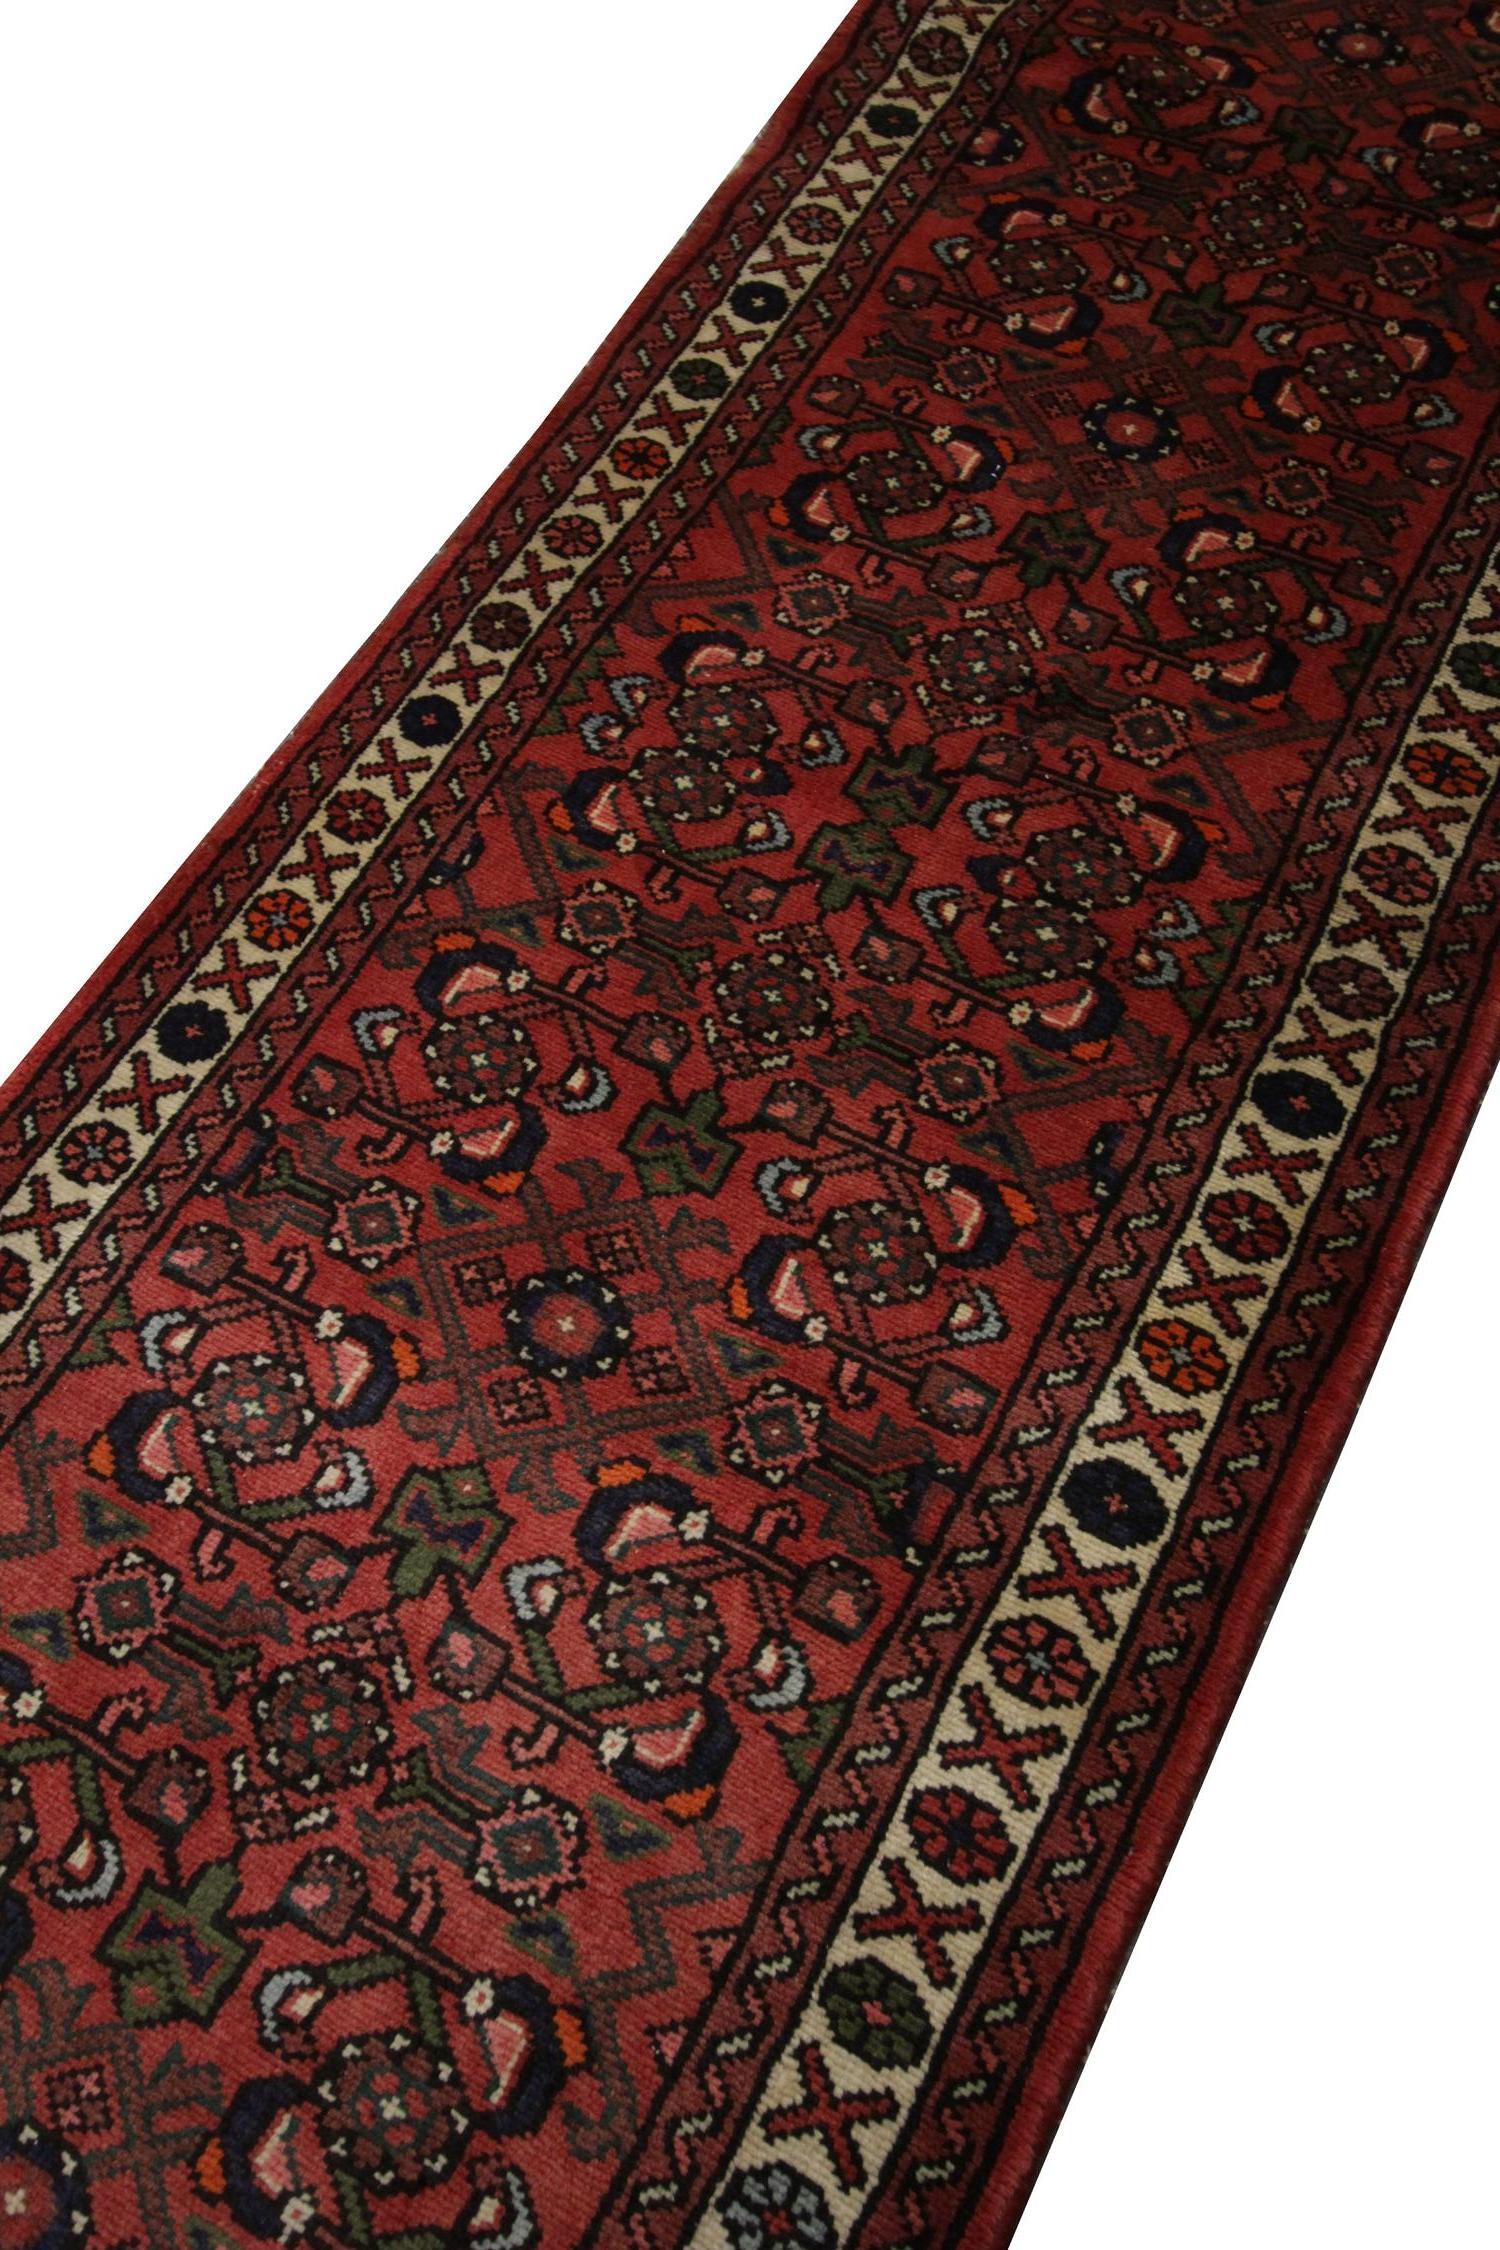 Tribal Vintage Floral Runner Rug, Oriental Long Red Traditional Wool Carpet For Sale